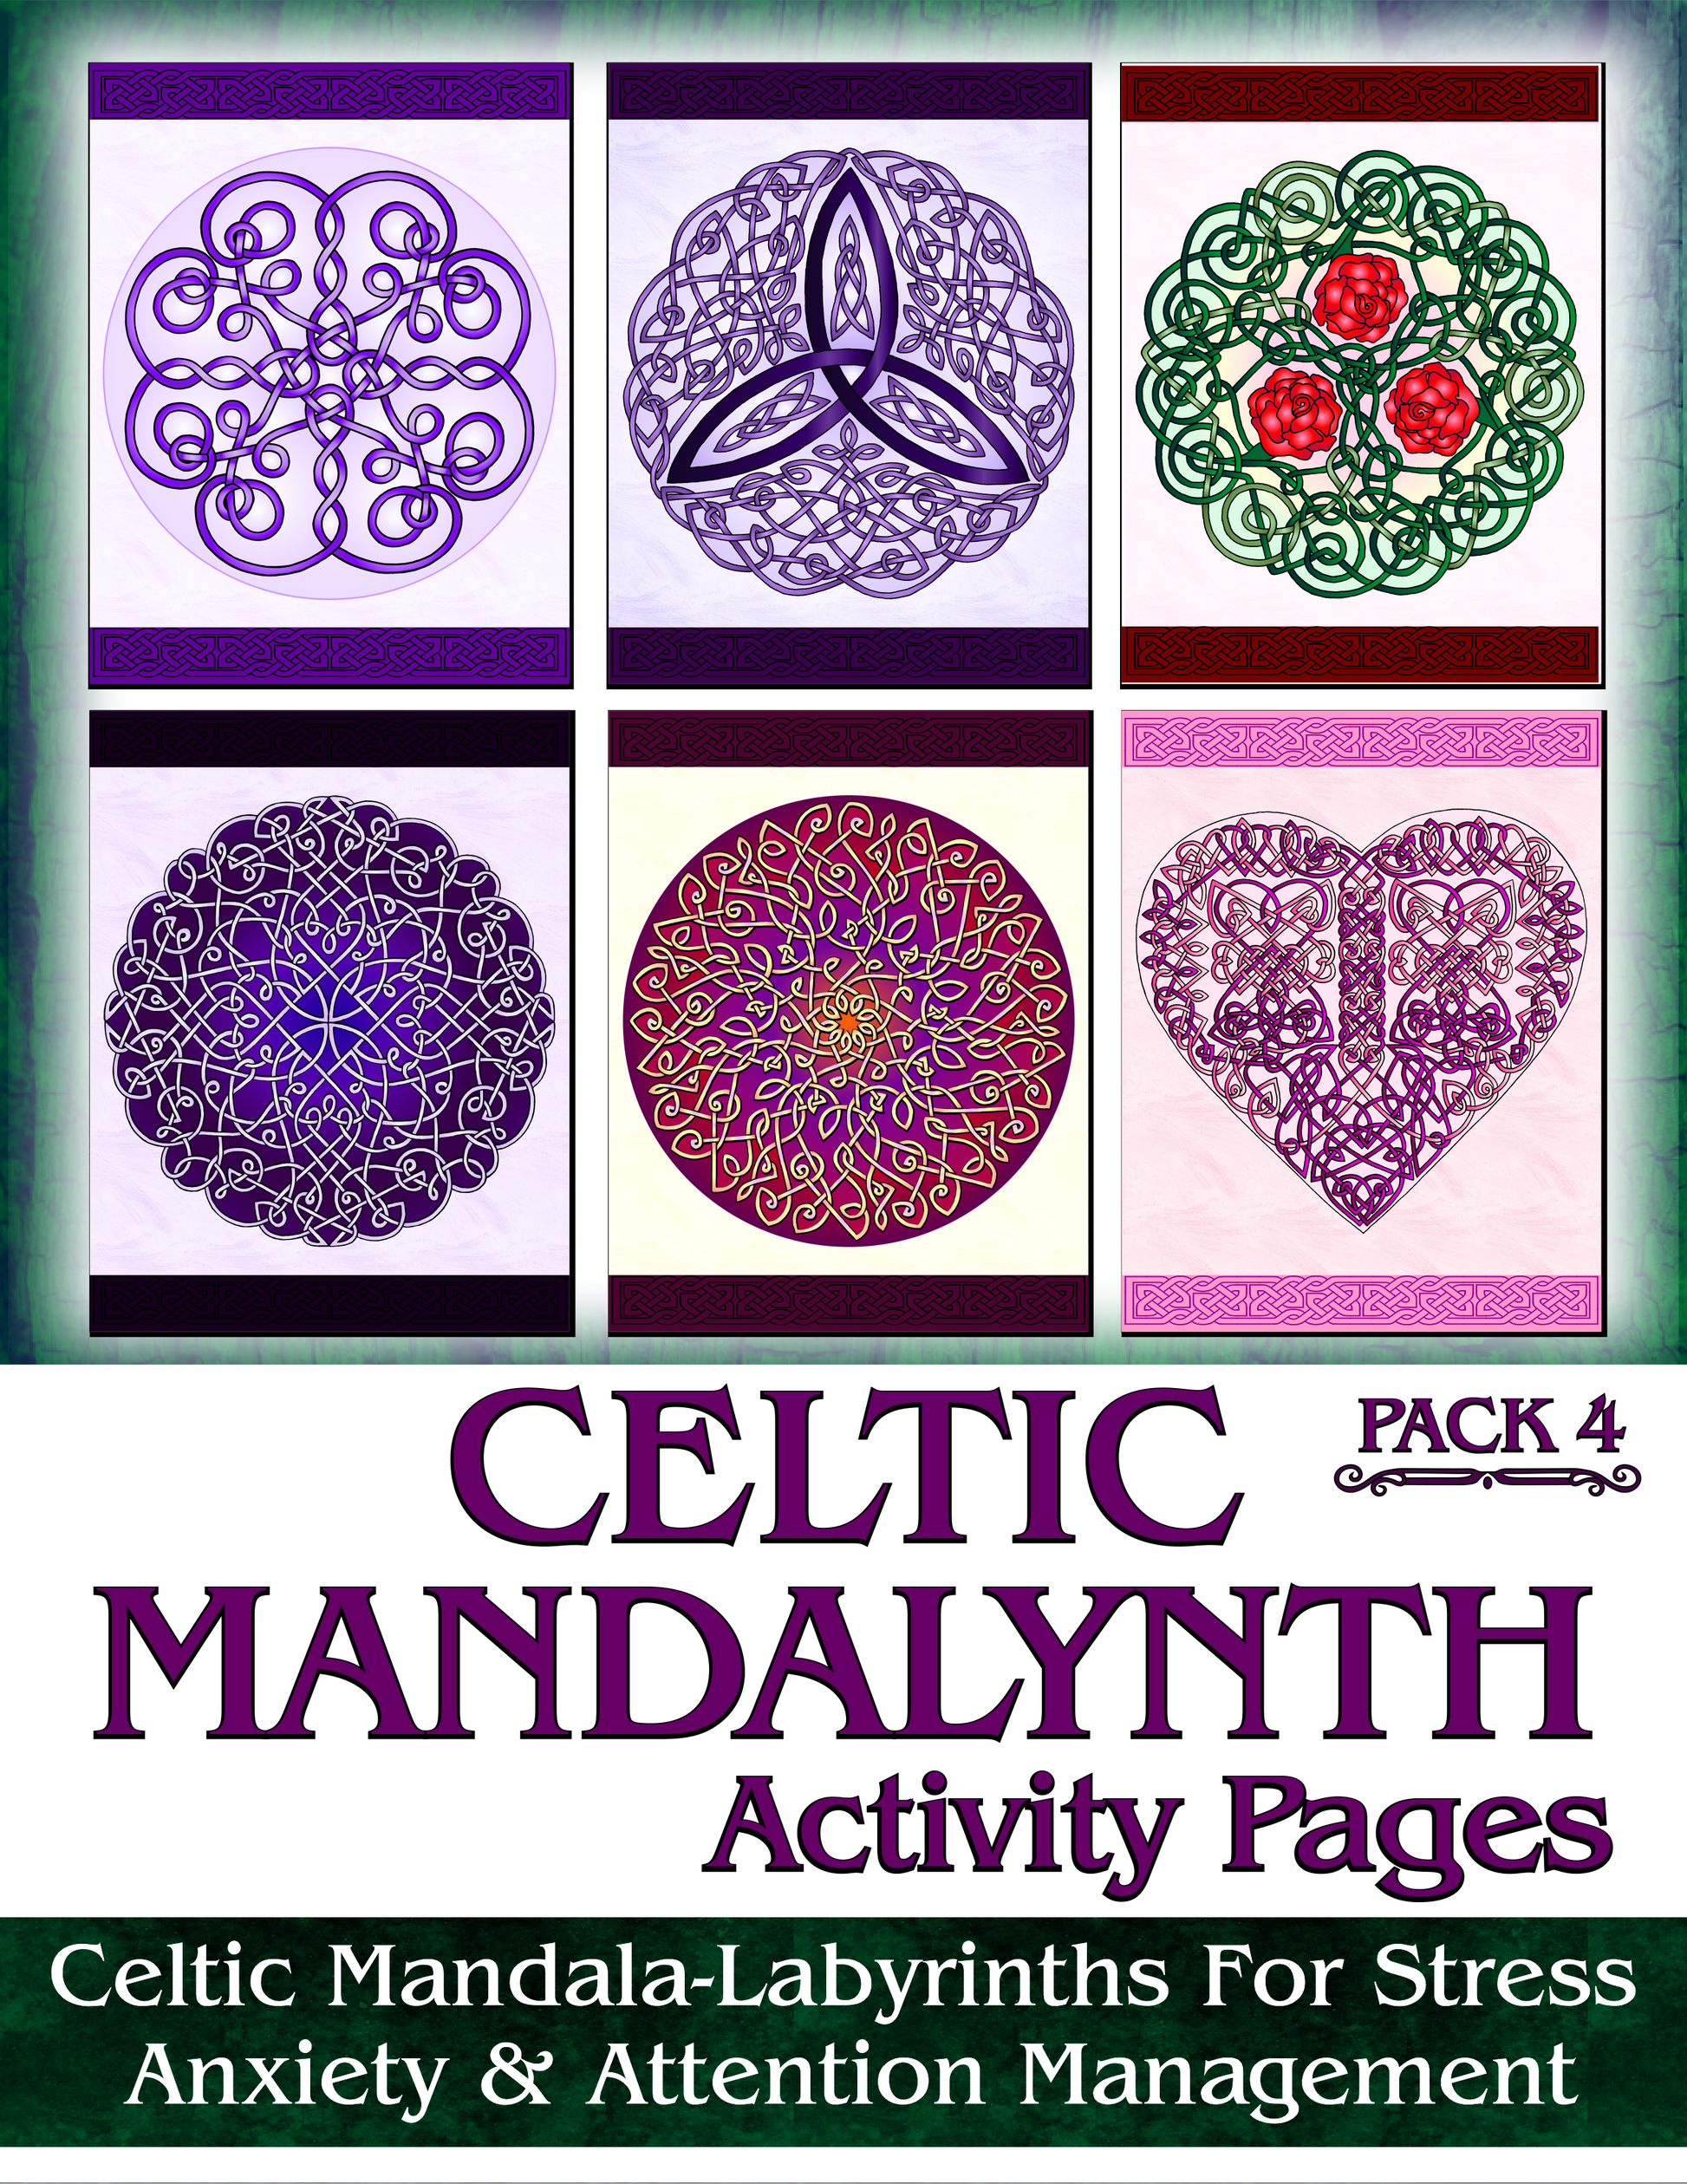 celtic,celticart,celtic knot, celtic knotwork,knotwork,irish,scottish,welsh,celtica,gealic,gael,trinity,triquetra,cross,celtic cross,celtic trinity